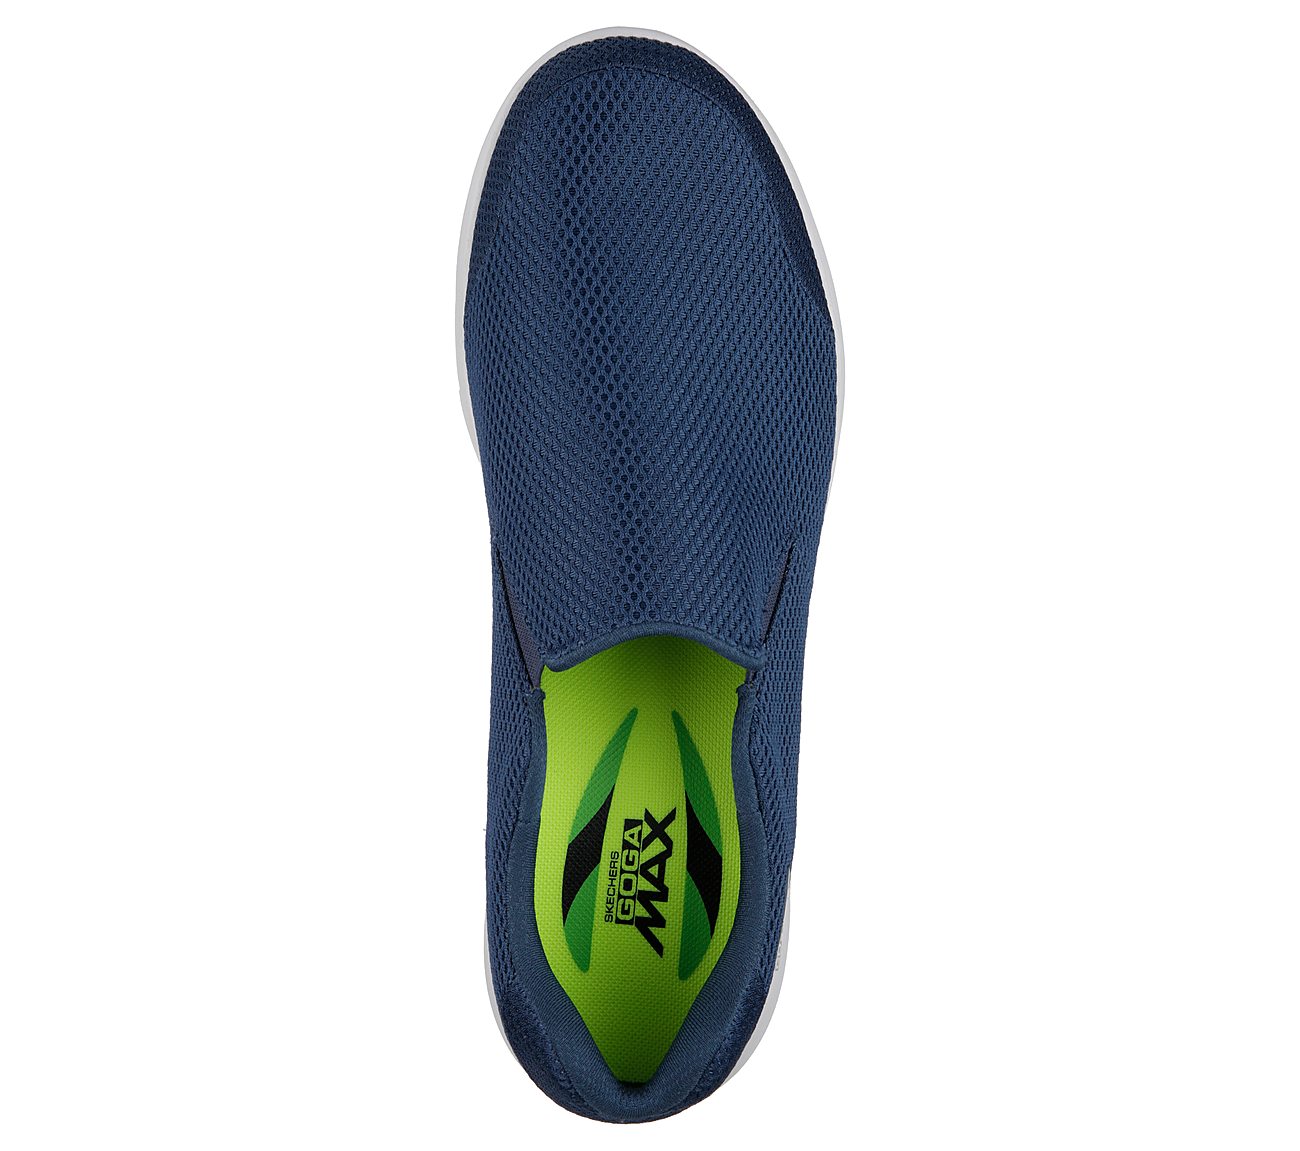 GO FLEX 2 - COMPLETION, NAVY/GREY Footwear Top View